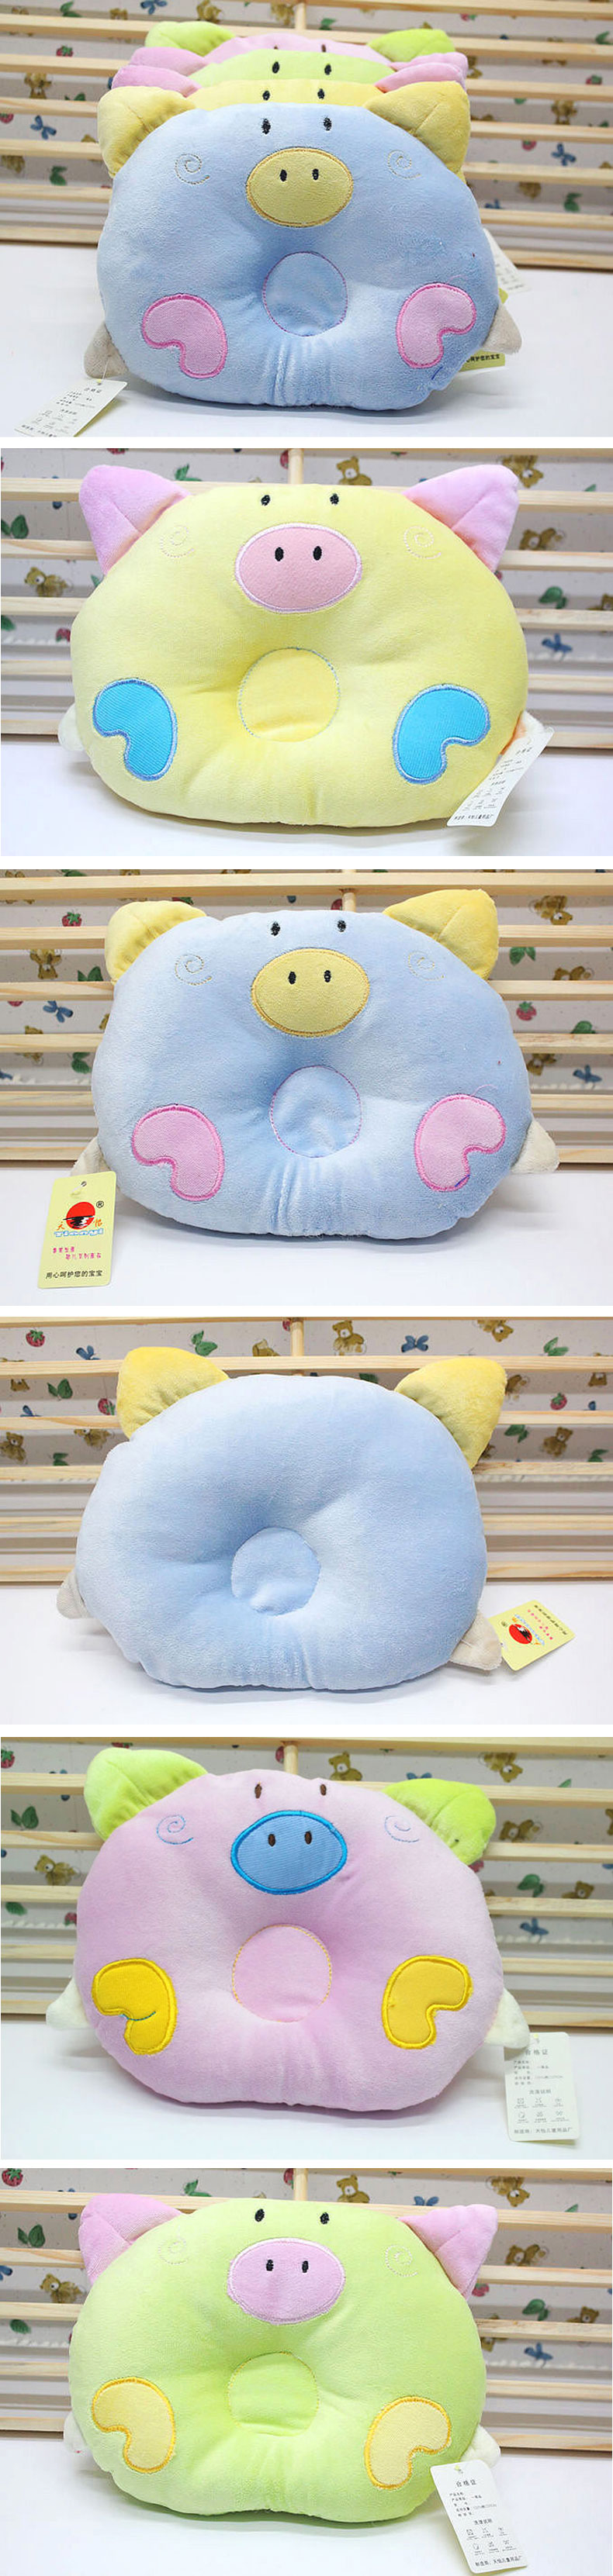 Baby-Infant-Newborn-Sleep-Positioner-Support-Pillow-Cushion-Prevent-Flat-Head-909218